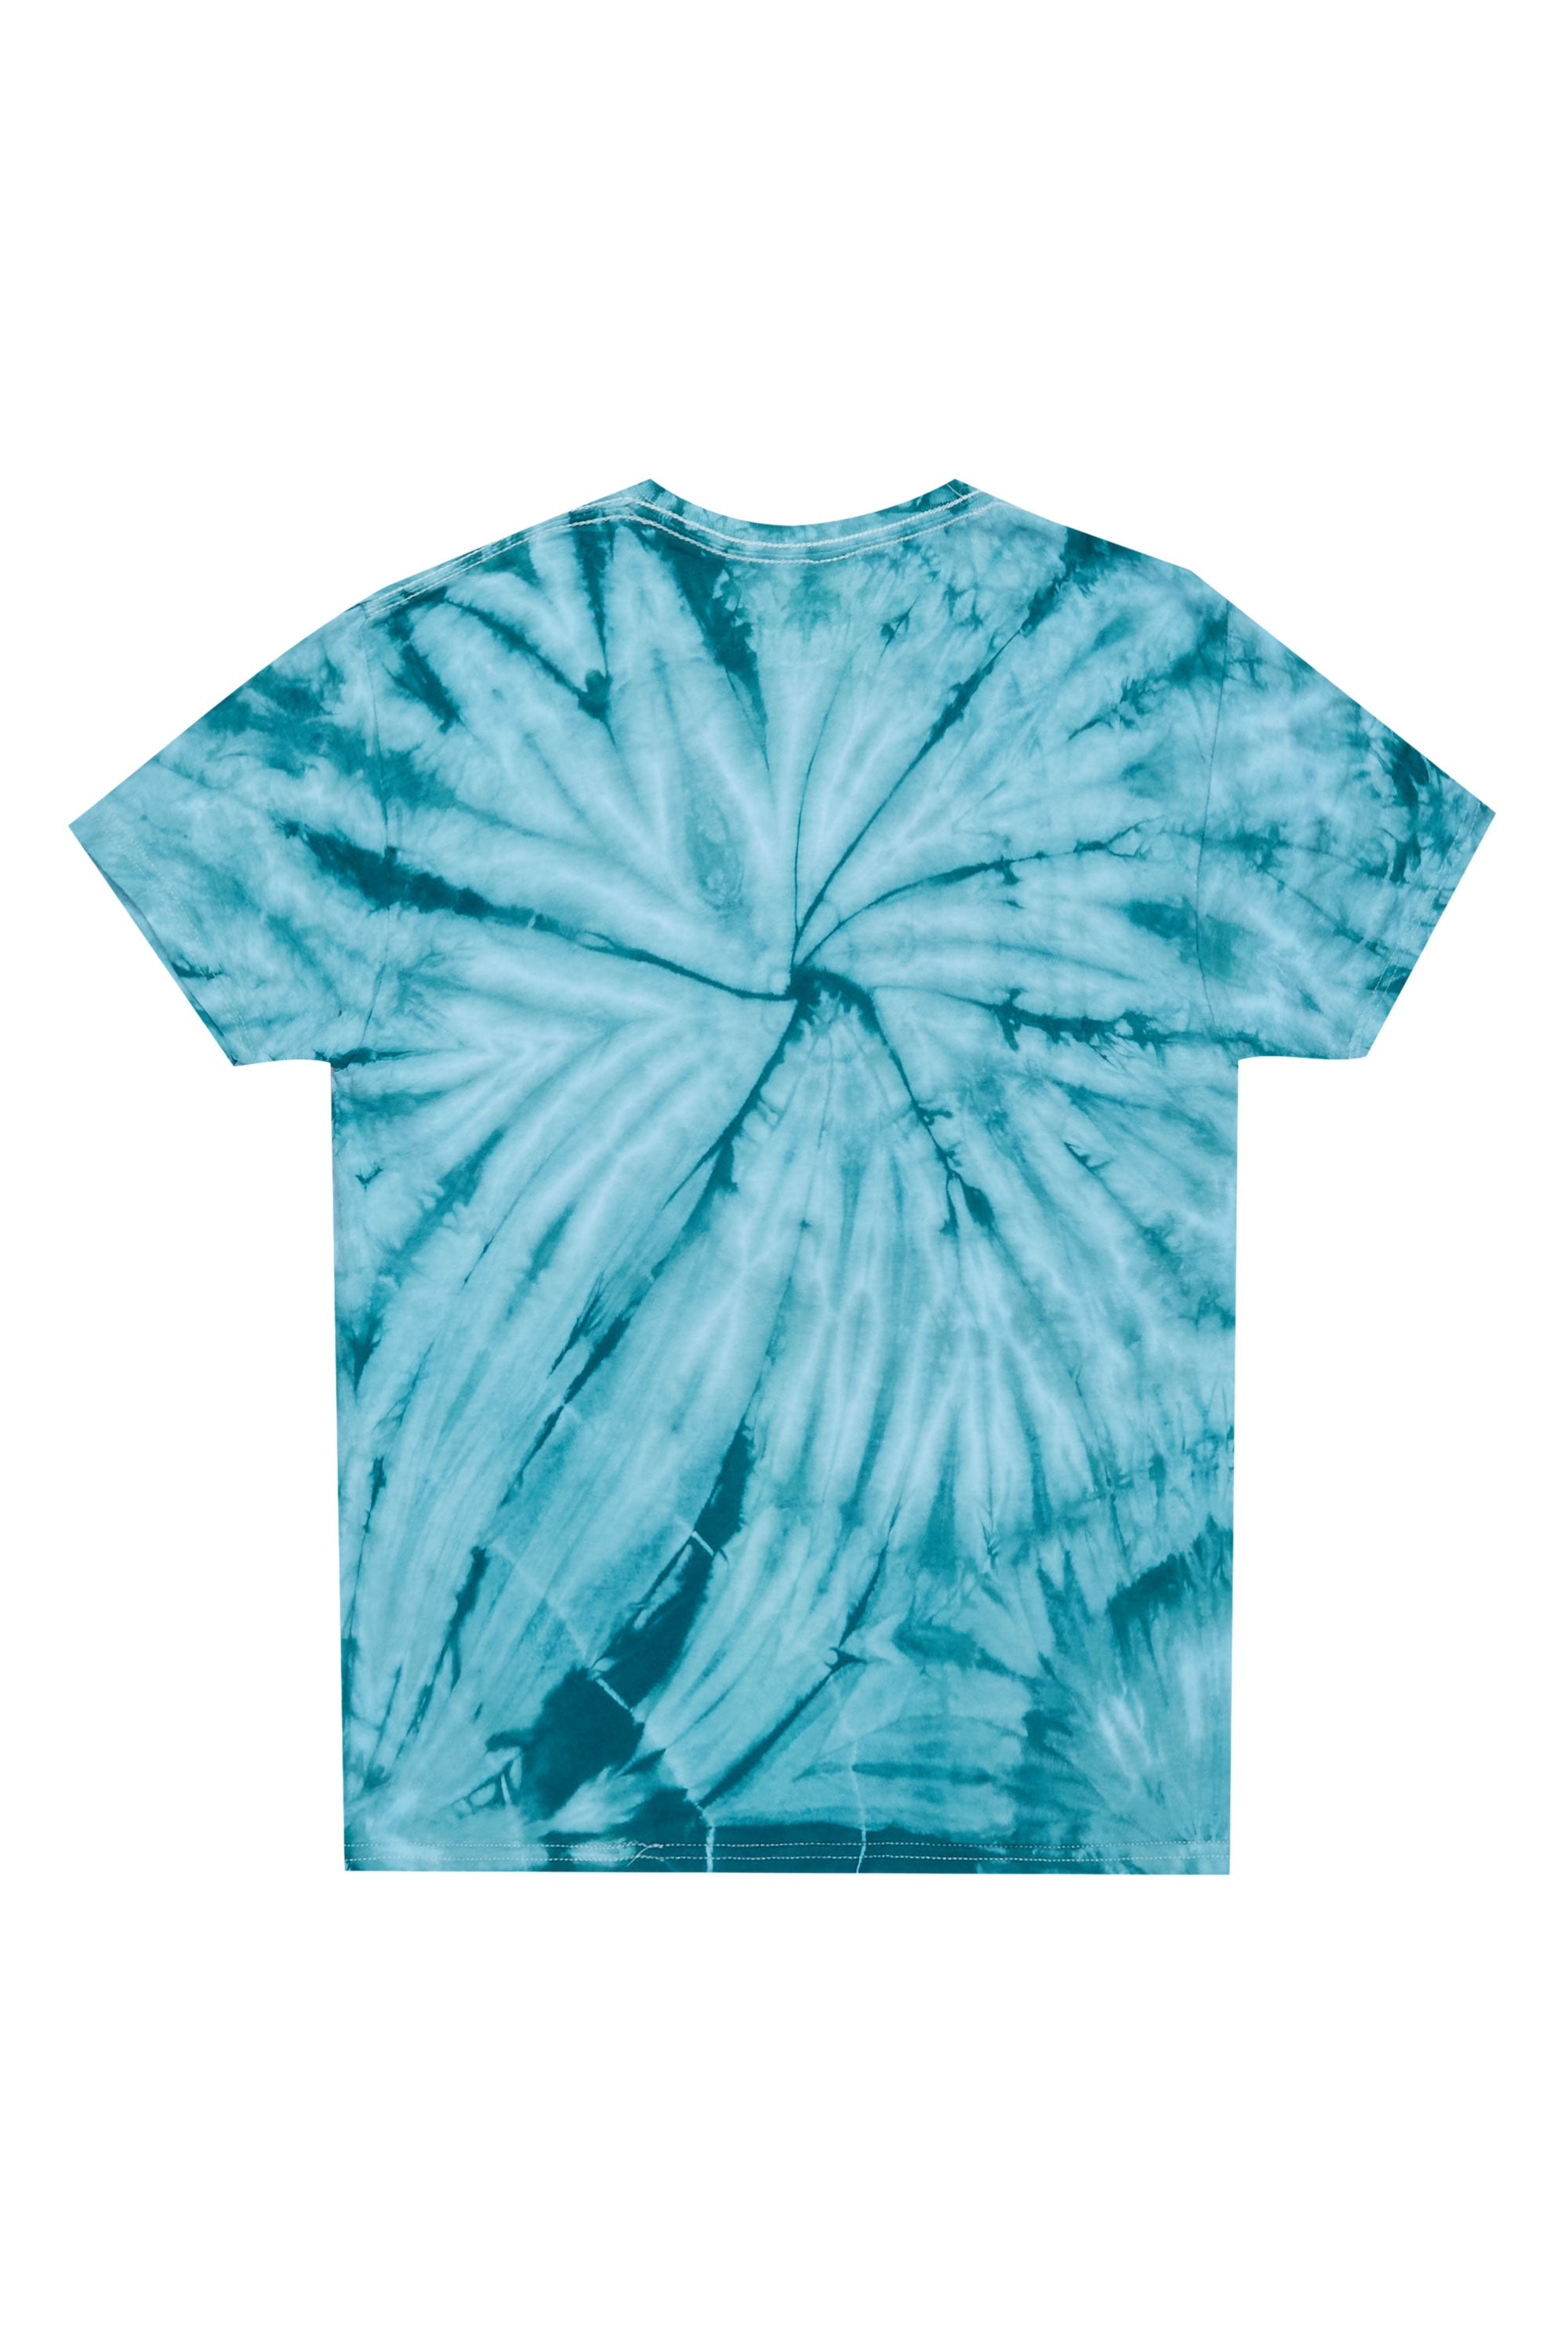 Youth Salem Blue Tie Dye Graphic T-Shirt